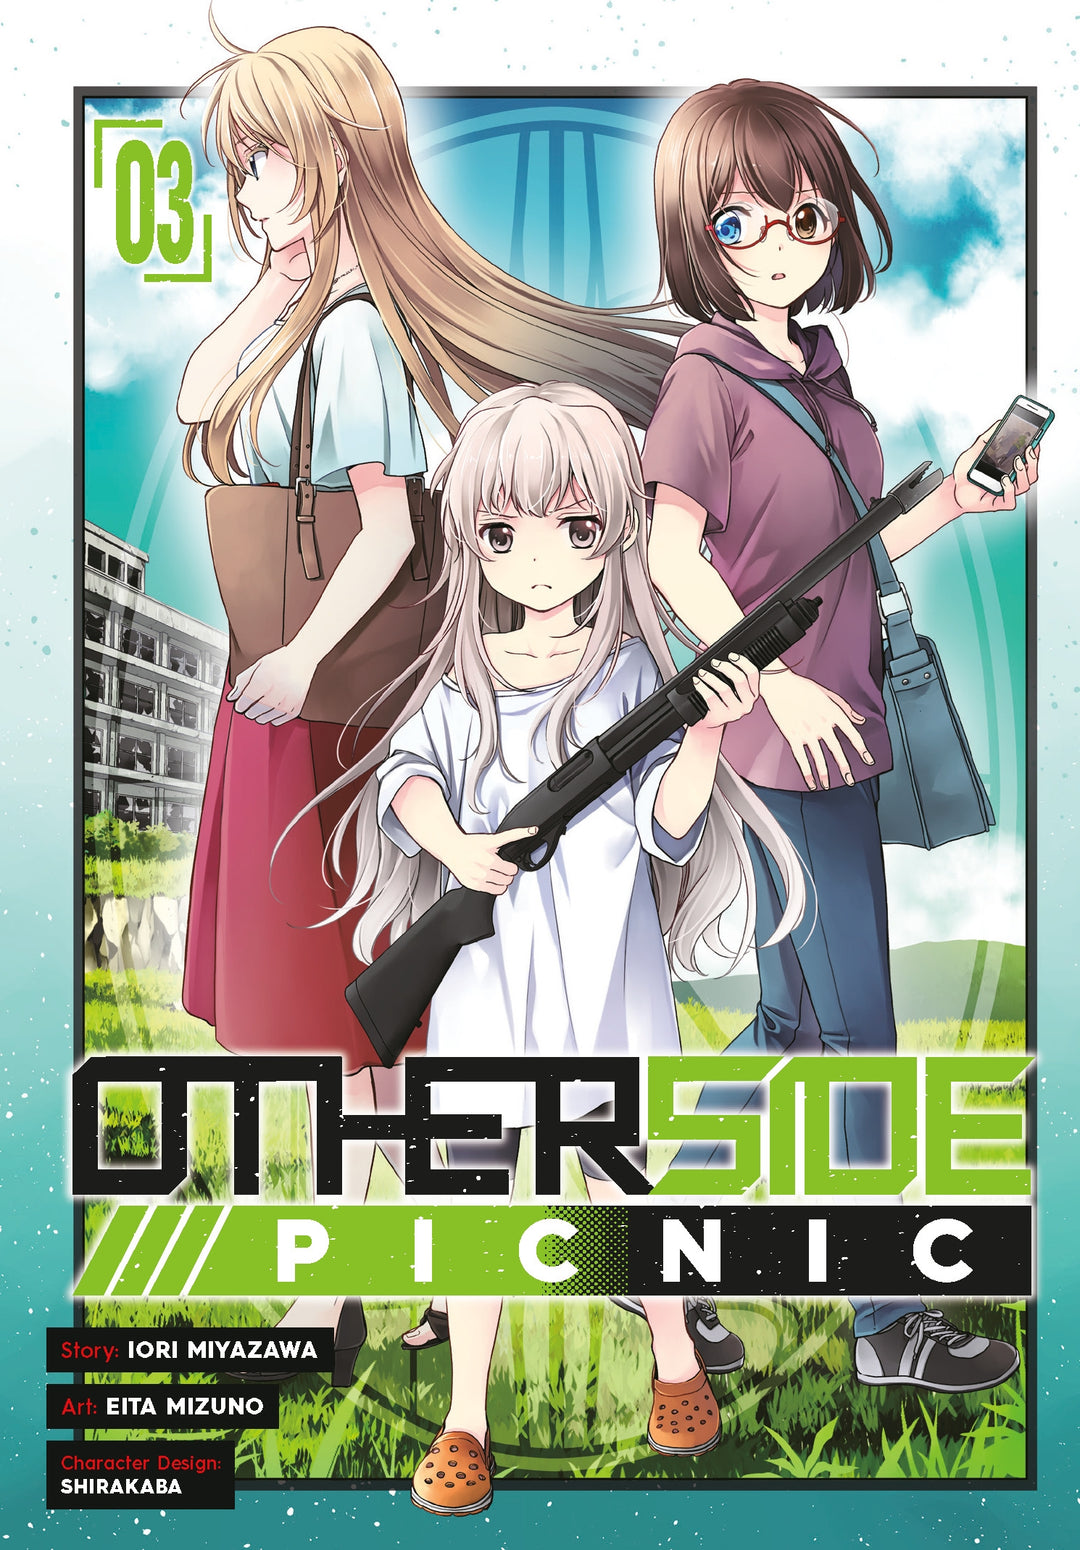 Otherside Picnic (Manga), Vol. 03